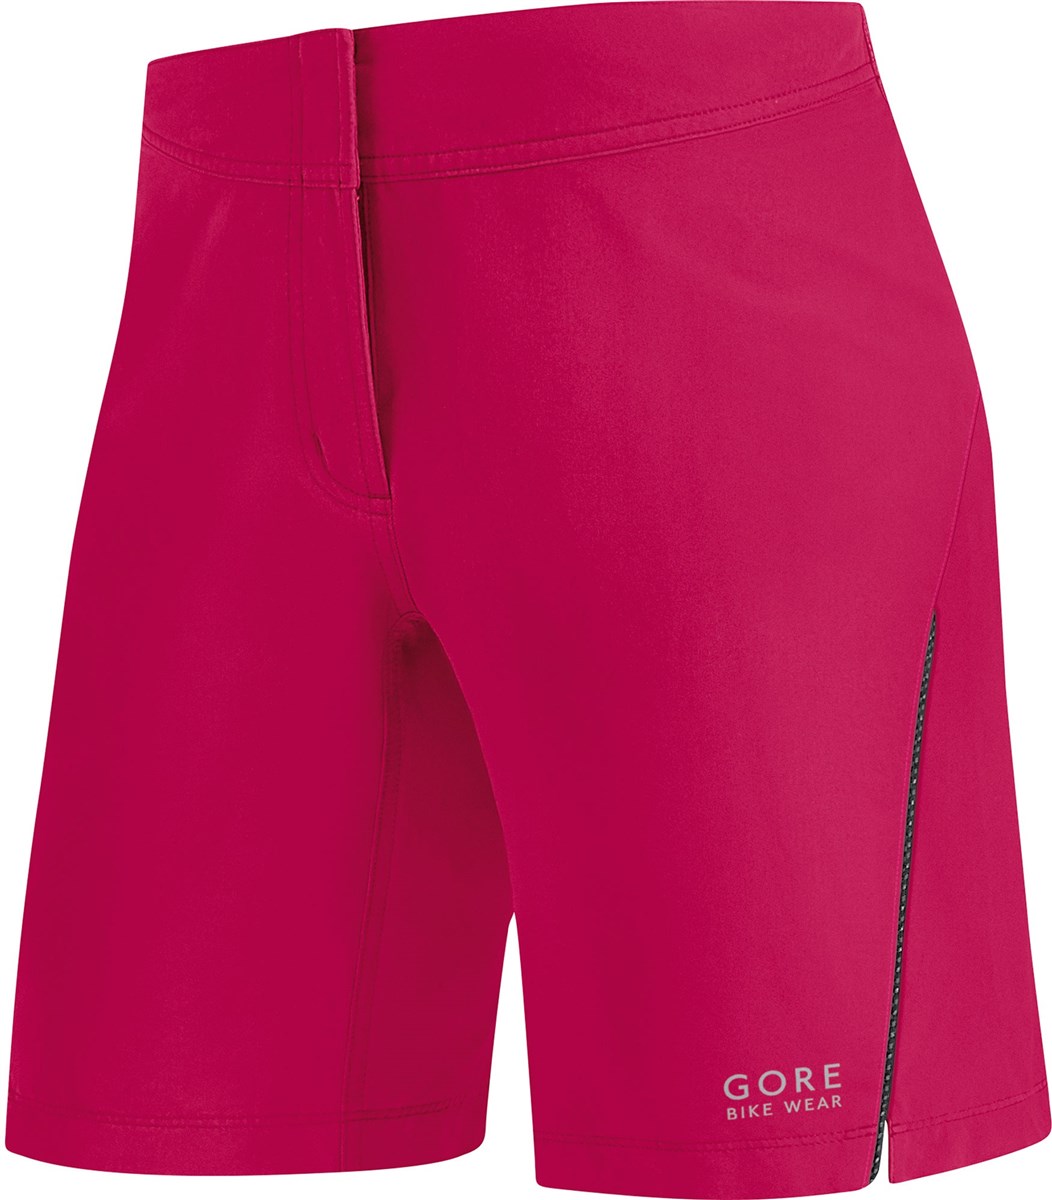 Gore E Womens Shorts AW17